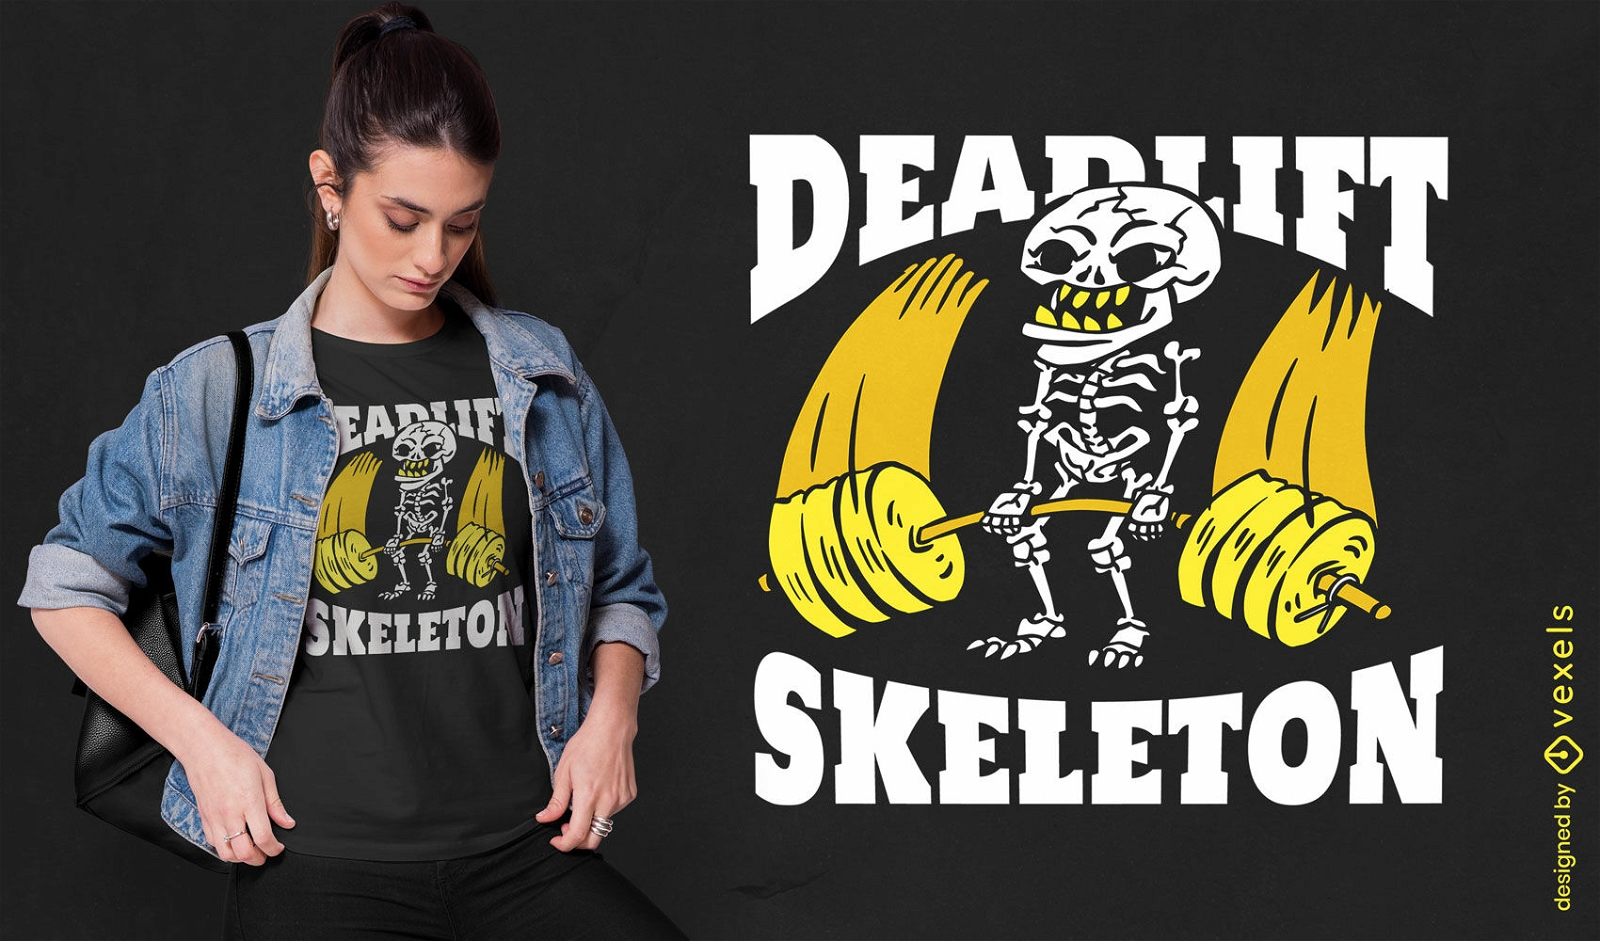 Skeleton lifting weights sport t-shirt design